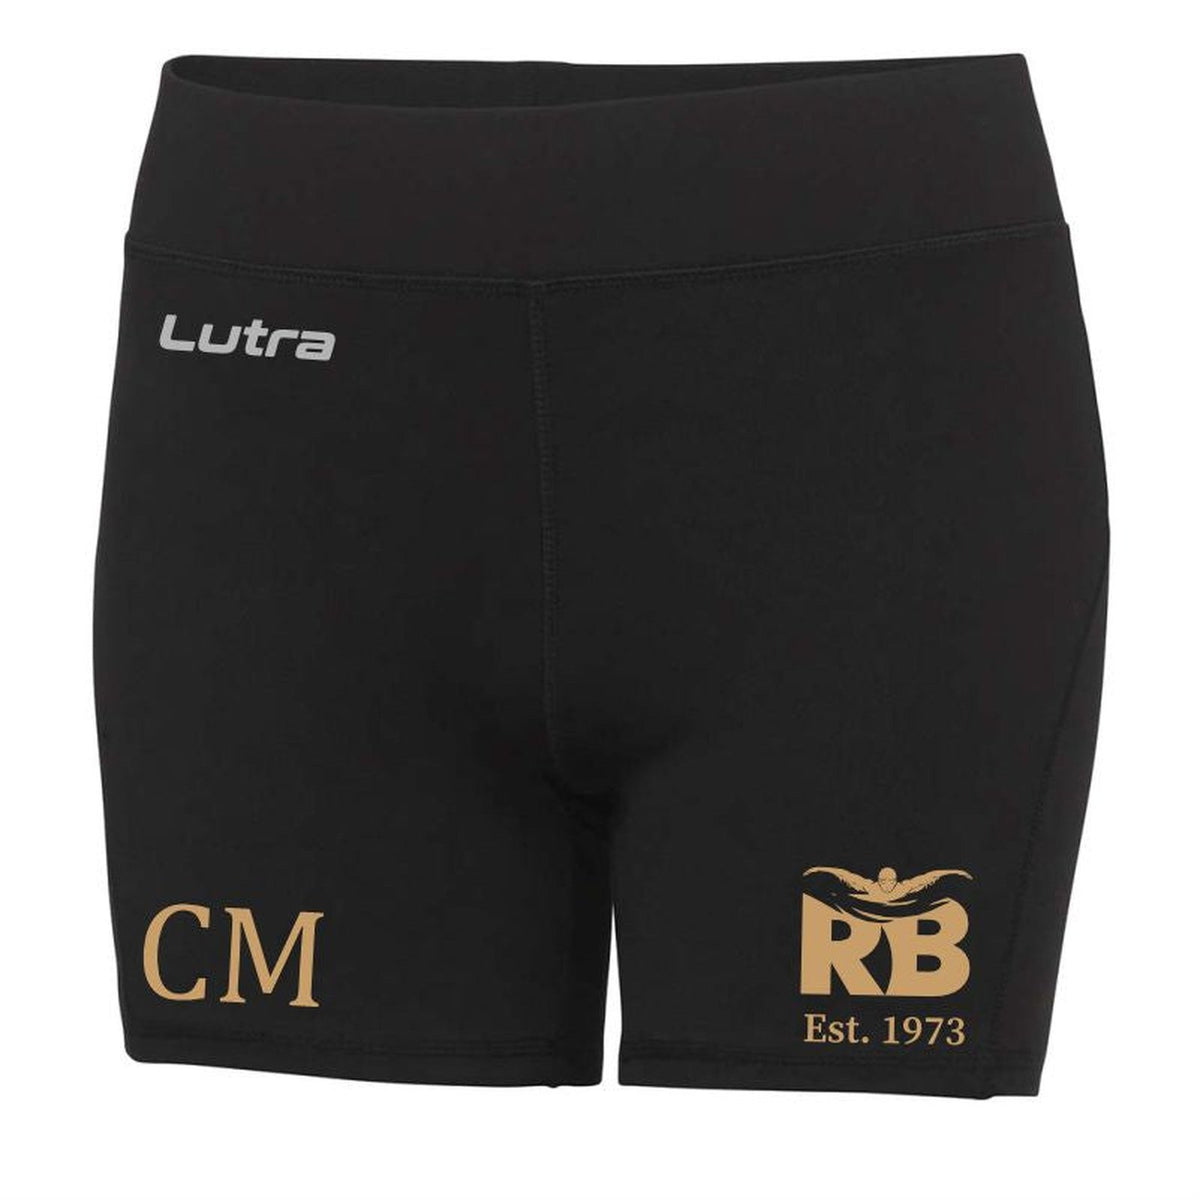 RB ASC - Lutra Cool Training Shorts Ladies - Black